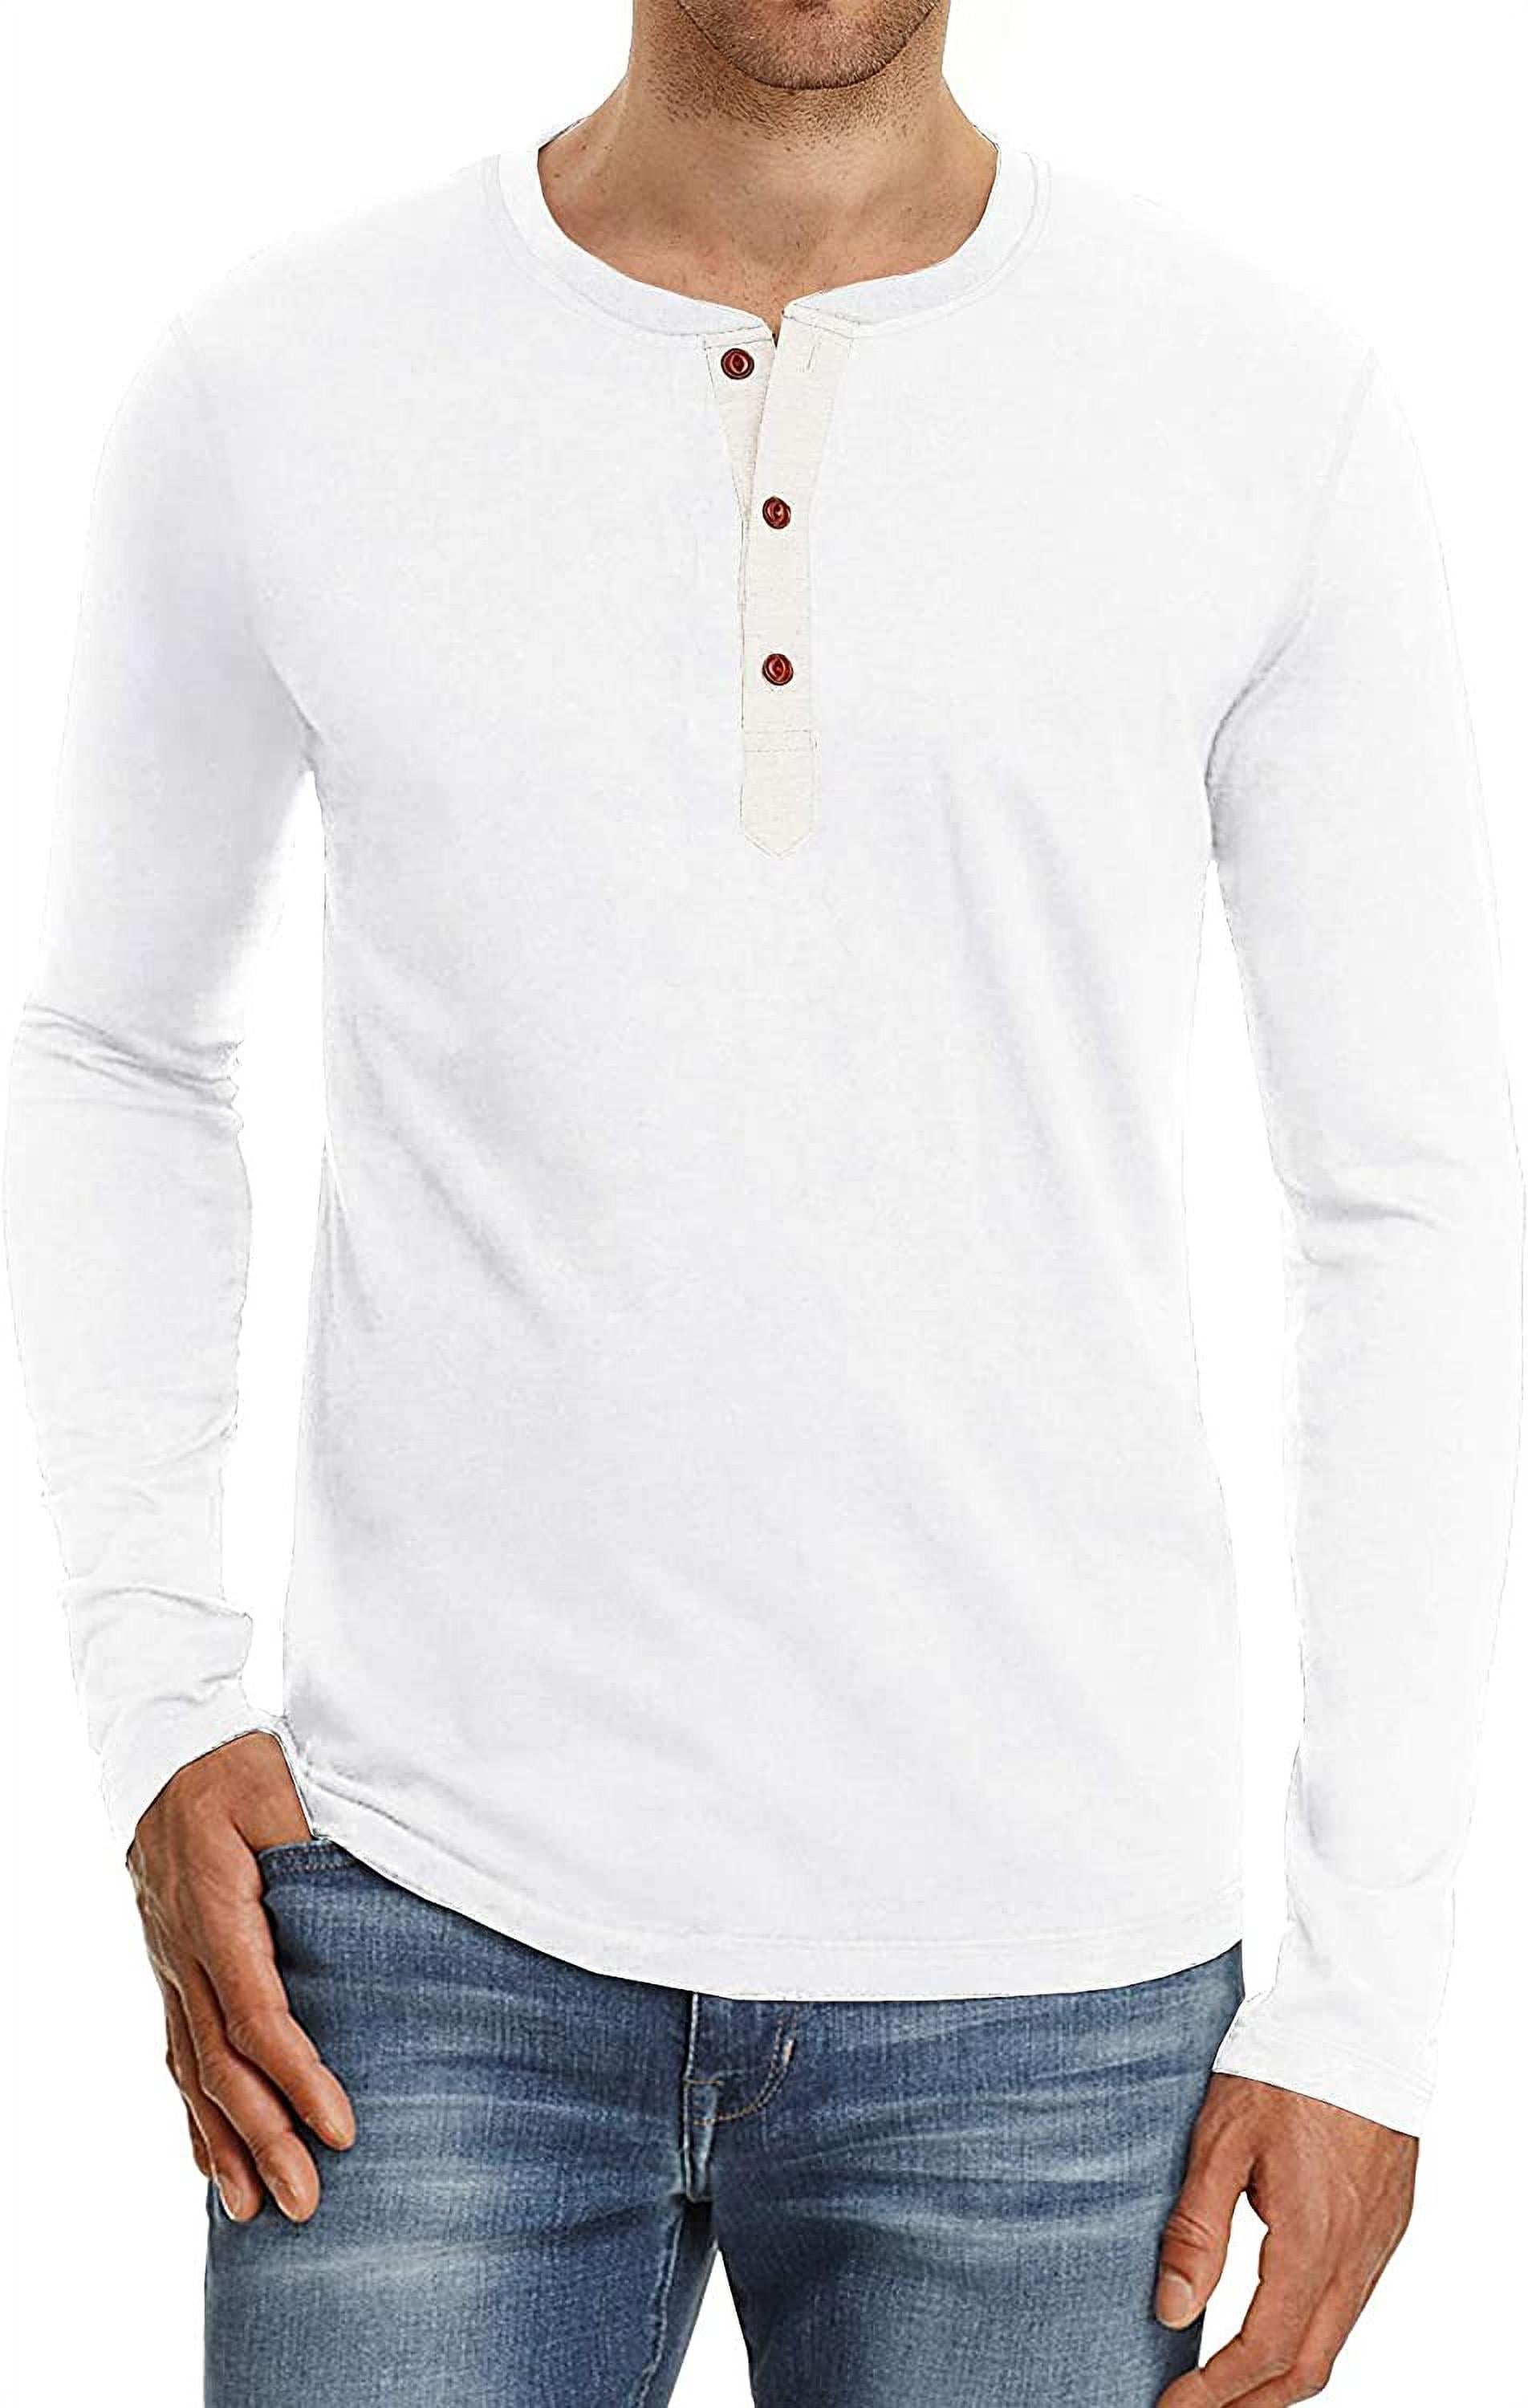 JWD Mens Henley Long Sleeve T-Shirt Cotton Casual Shirt US Small White ...